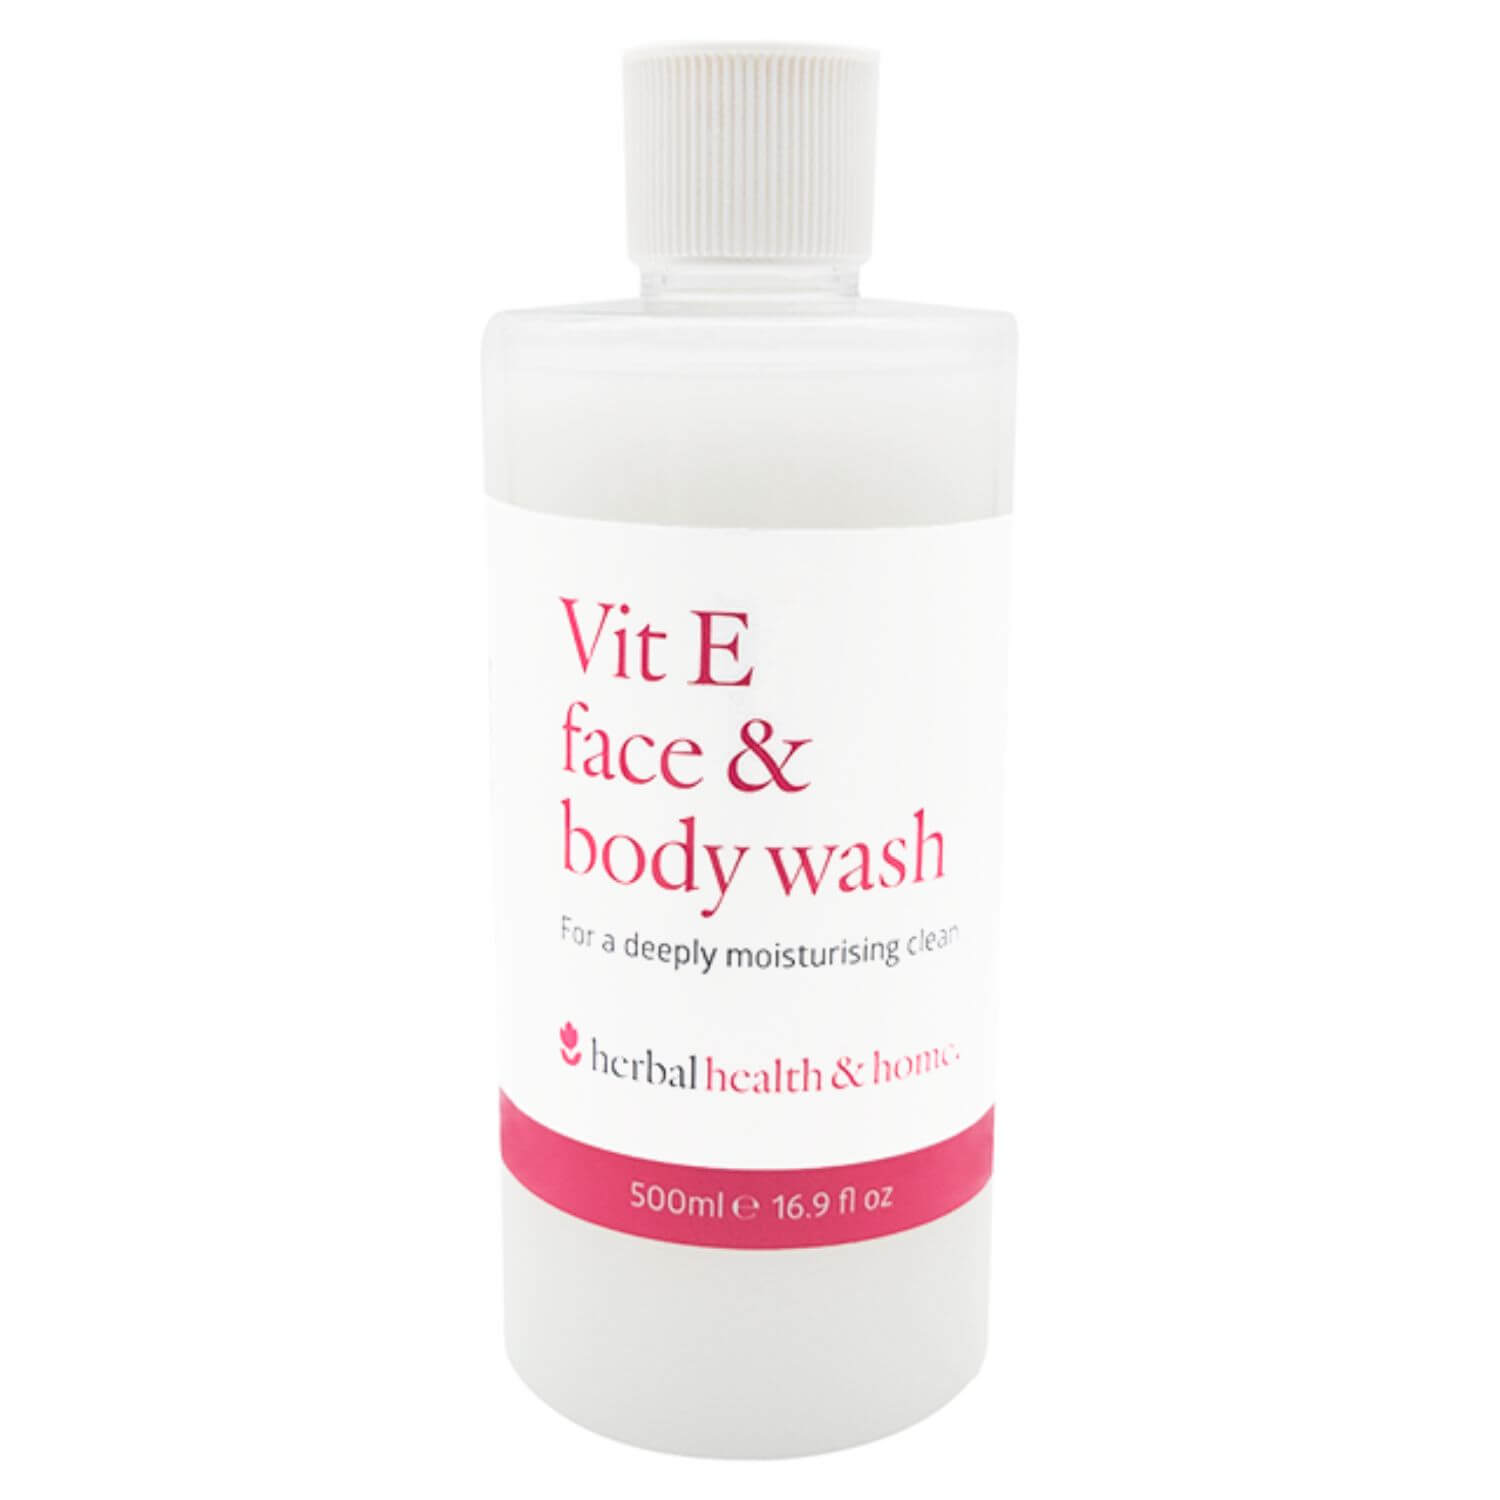 Vit E Face & Body Wash | Herbal, Health & Home